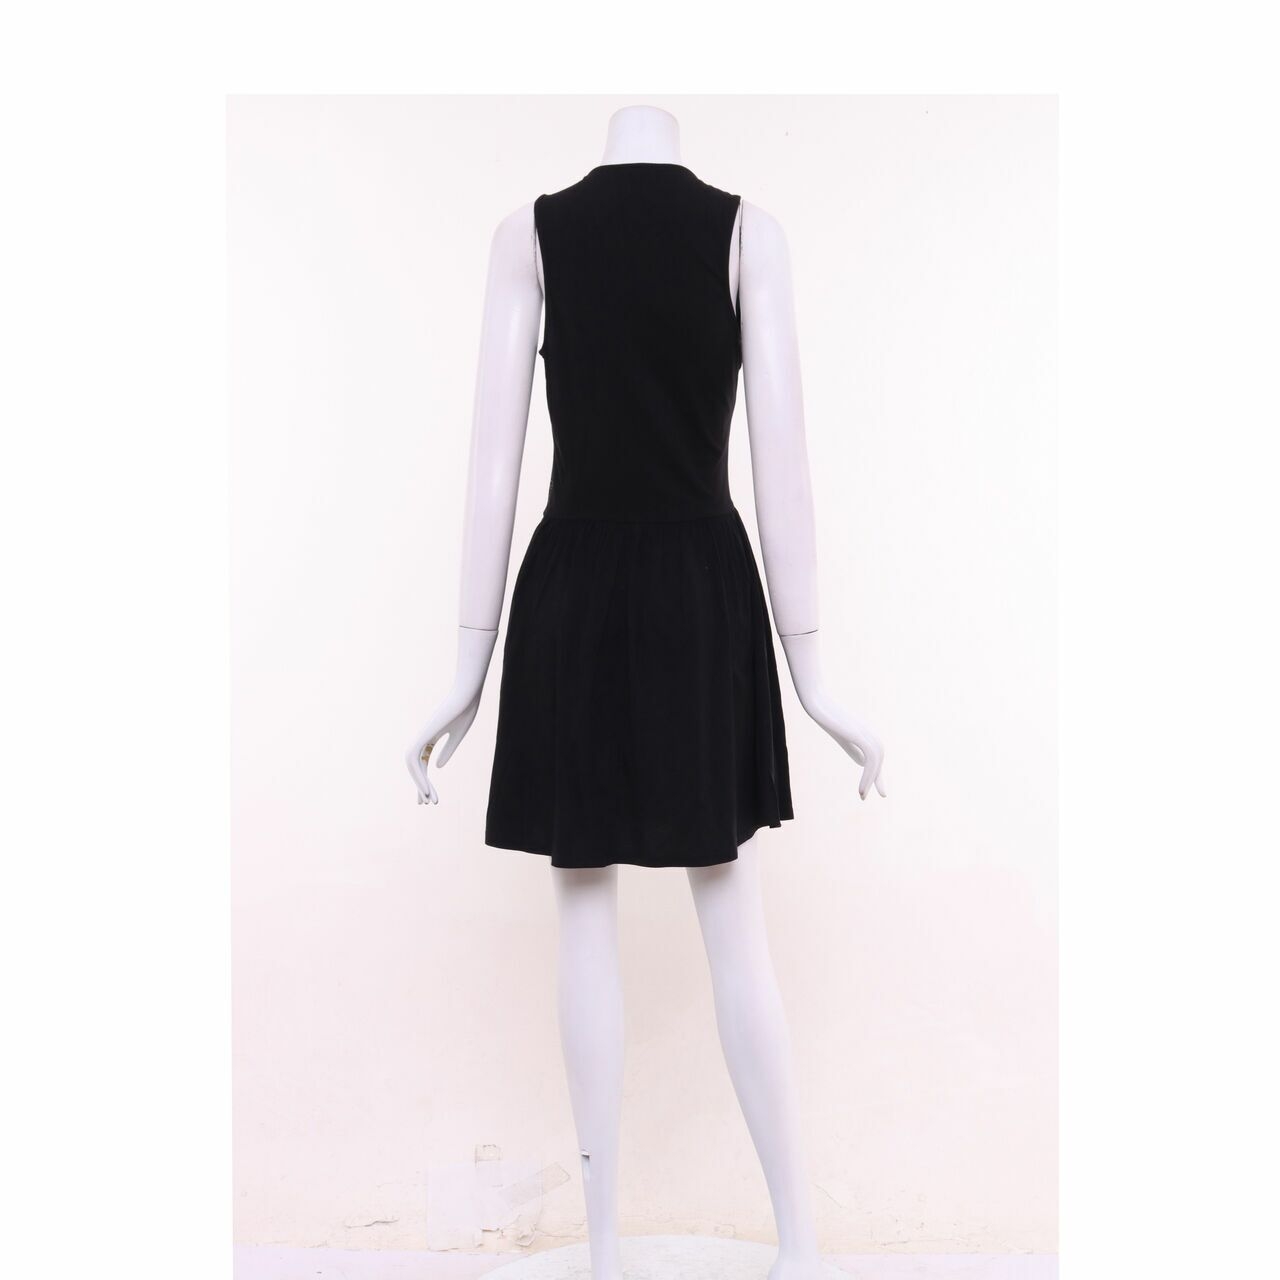 Topshop Black Animal Print Mini Dress